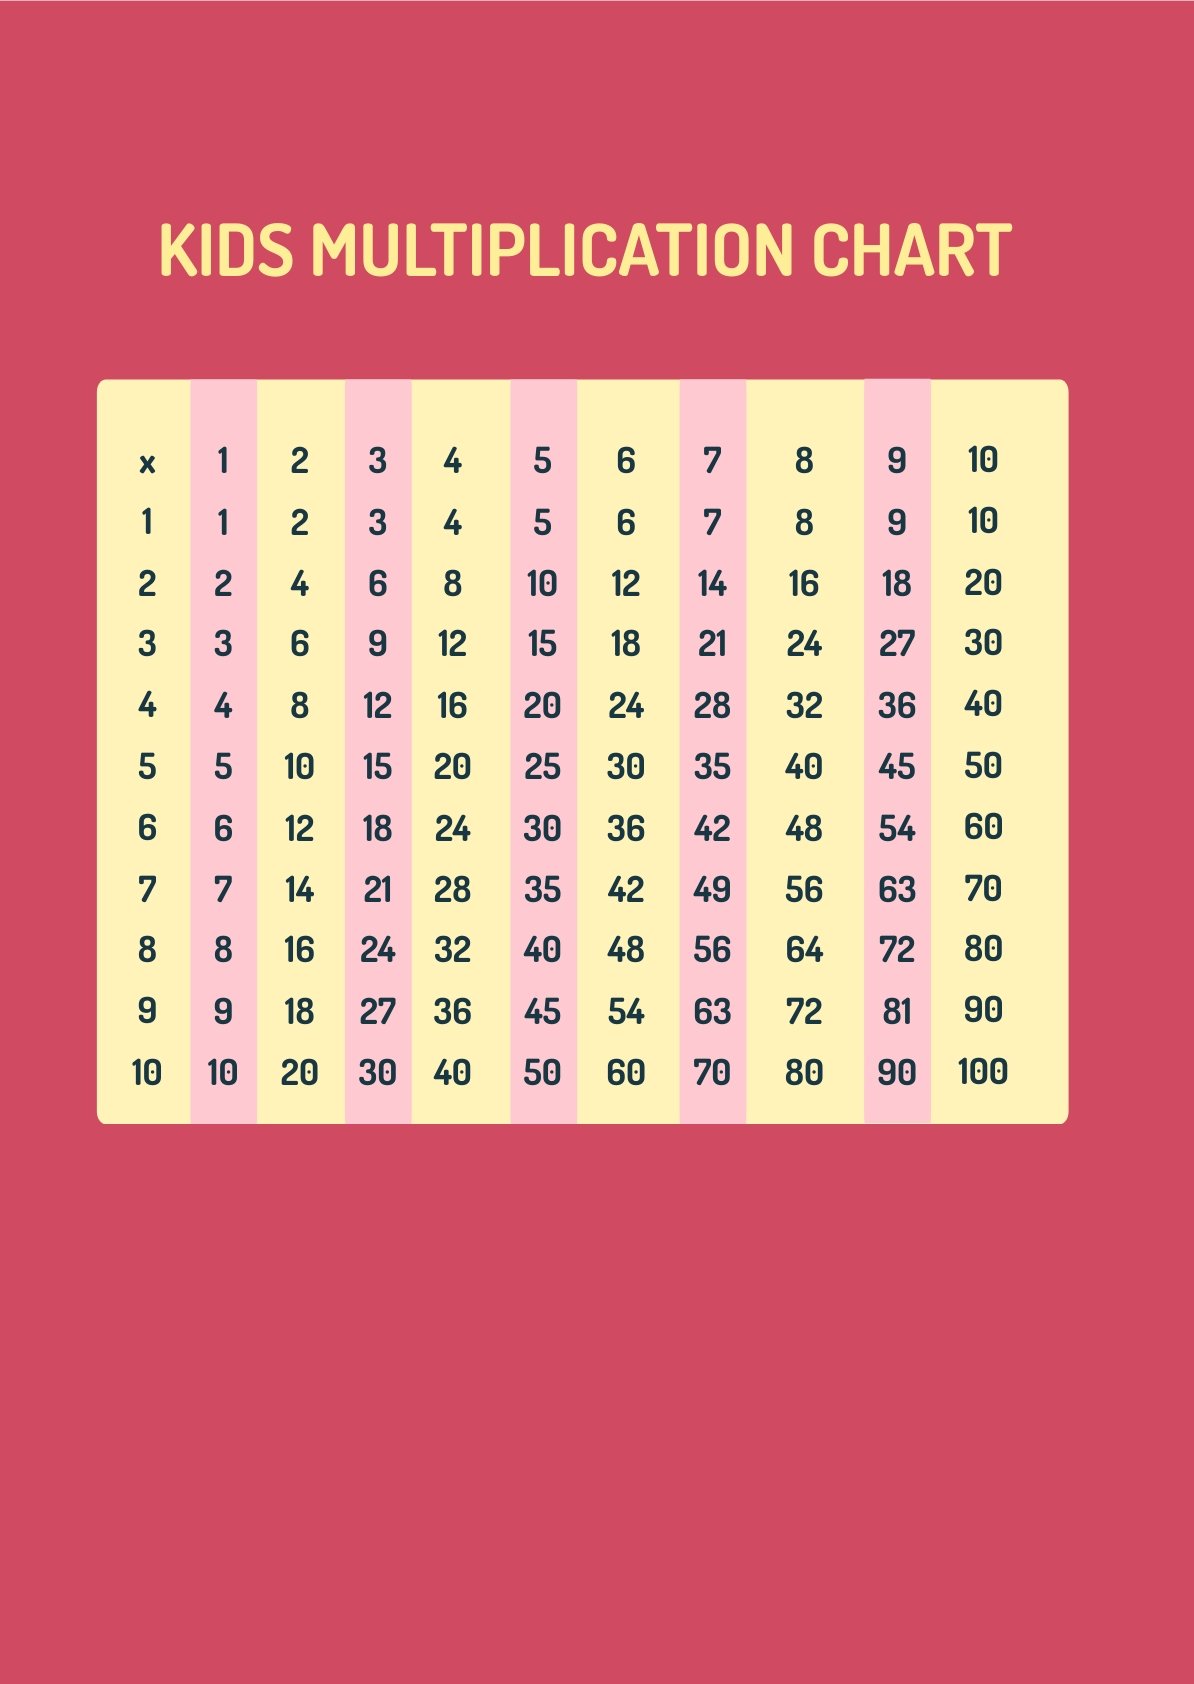 Kids Multiplication Chart